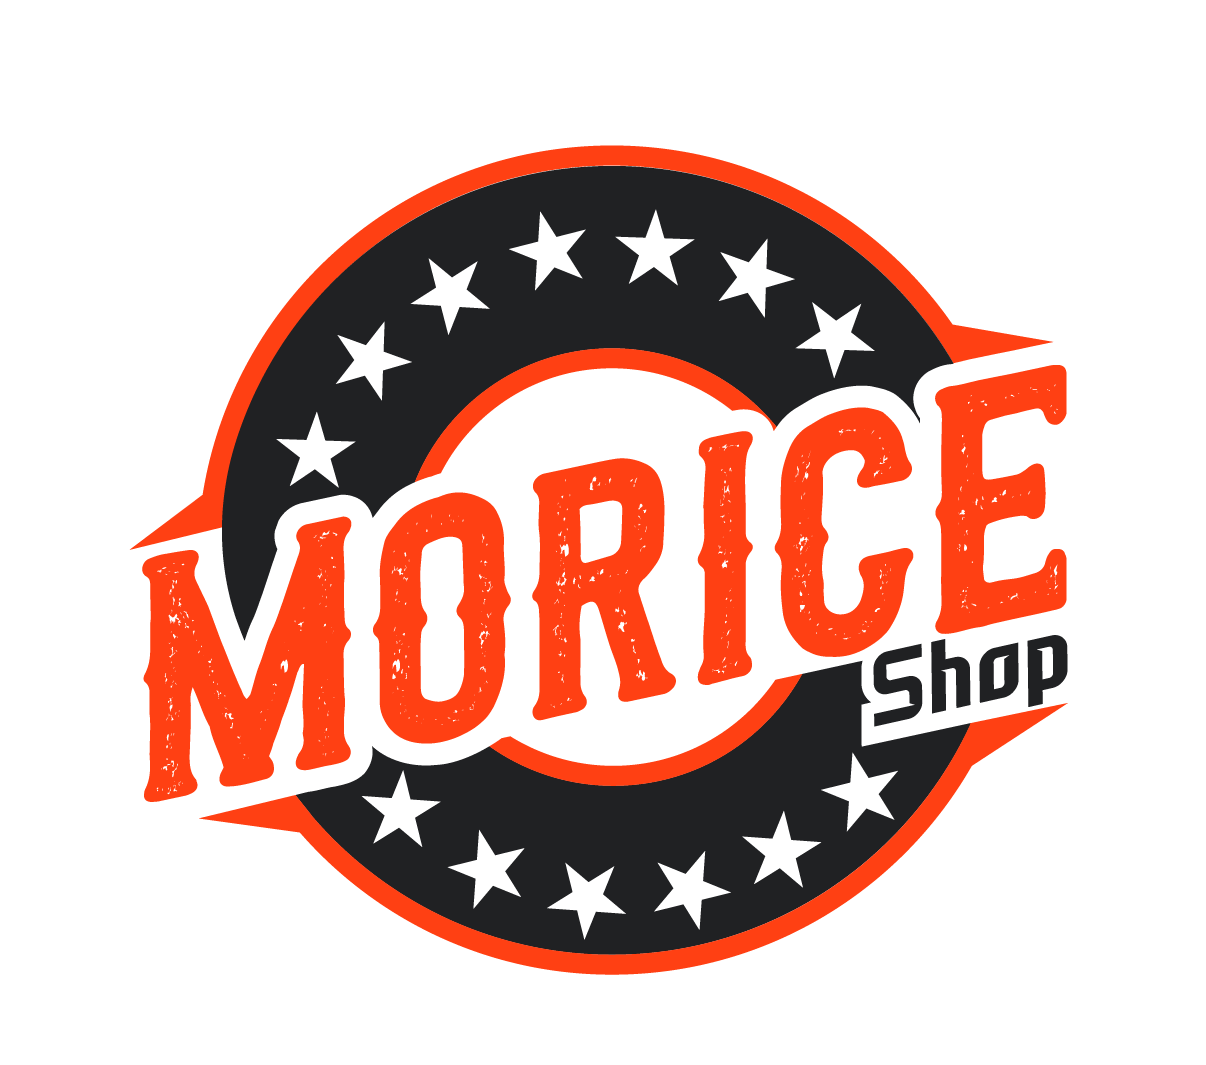 (c) Morice.shop